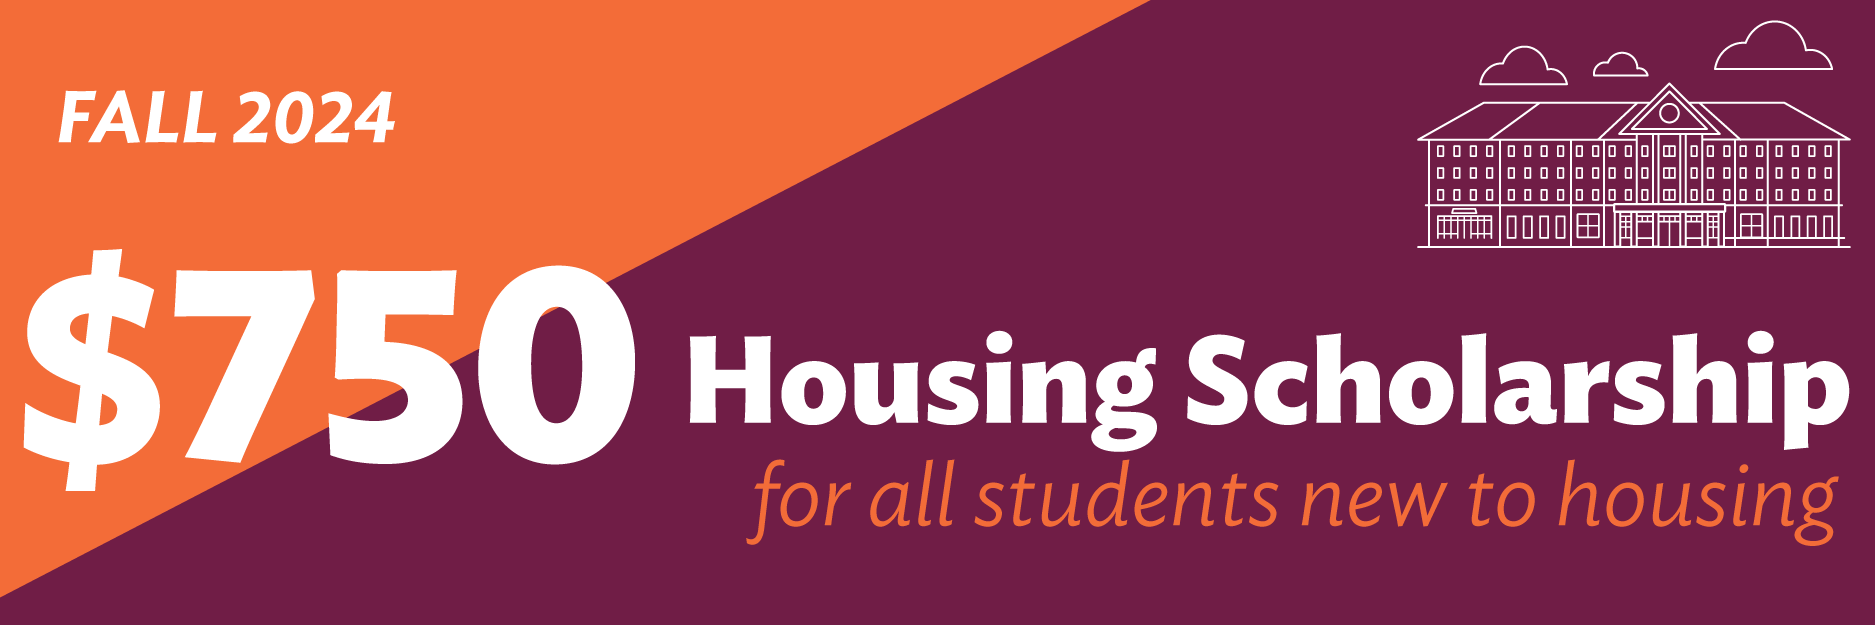 Fall 2024 Housing Scholarship